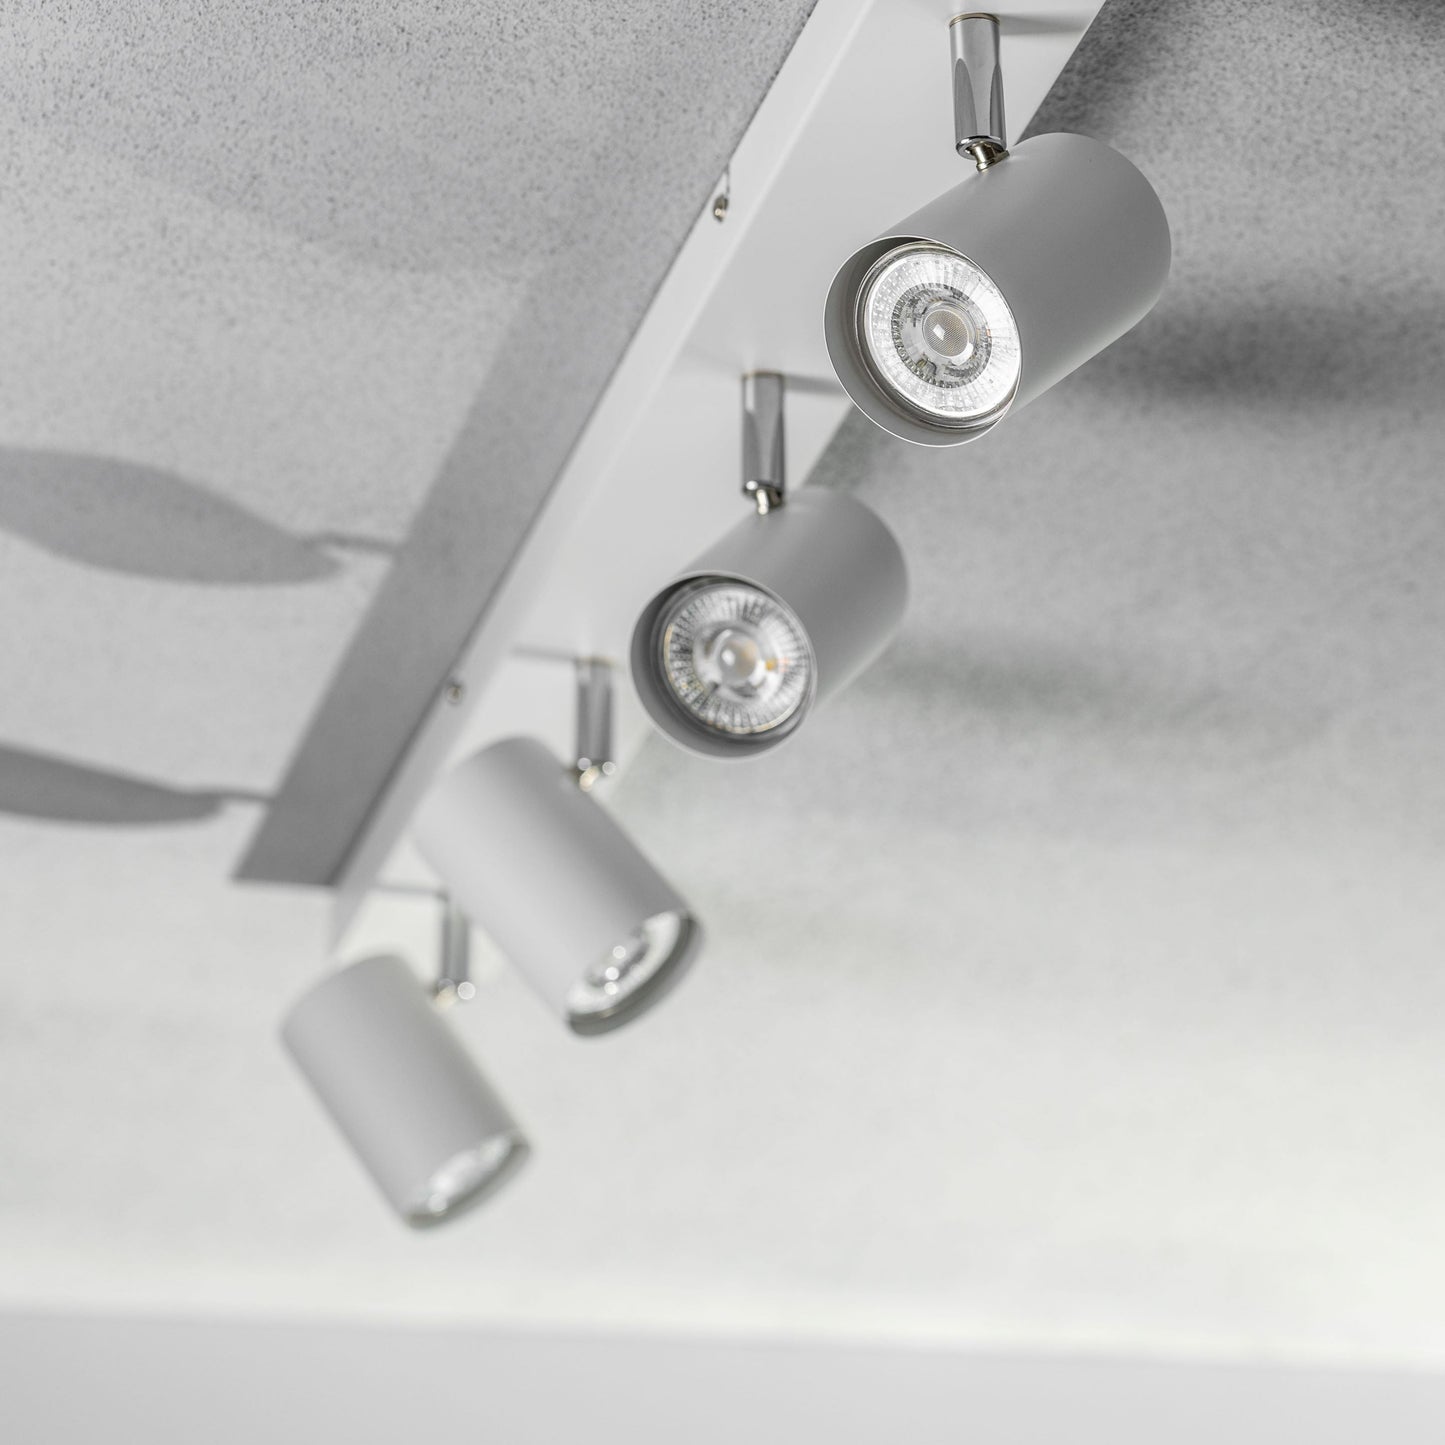 CGC VENETO White GU10 Ceiling Spotlight Four Head Adjustable Bar Light